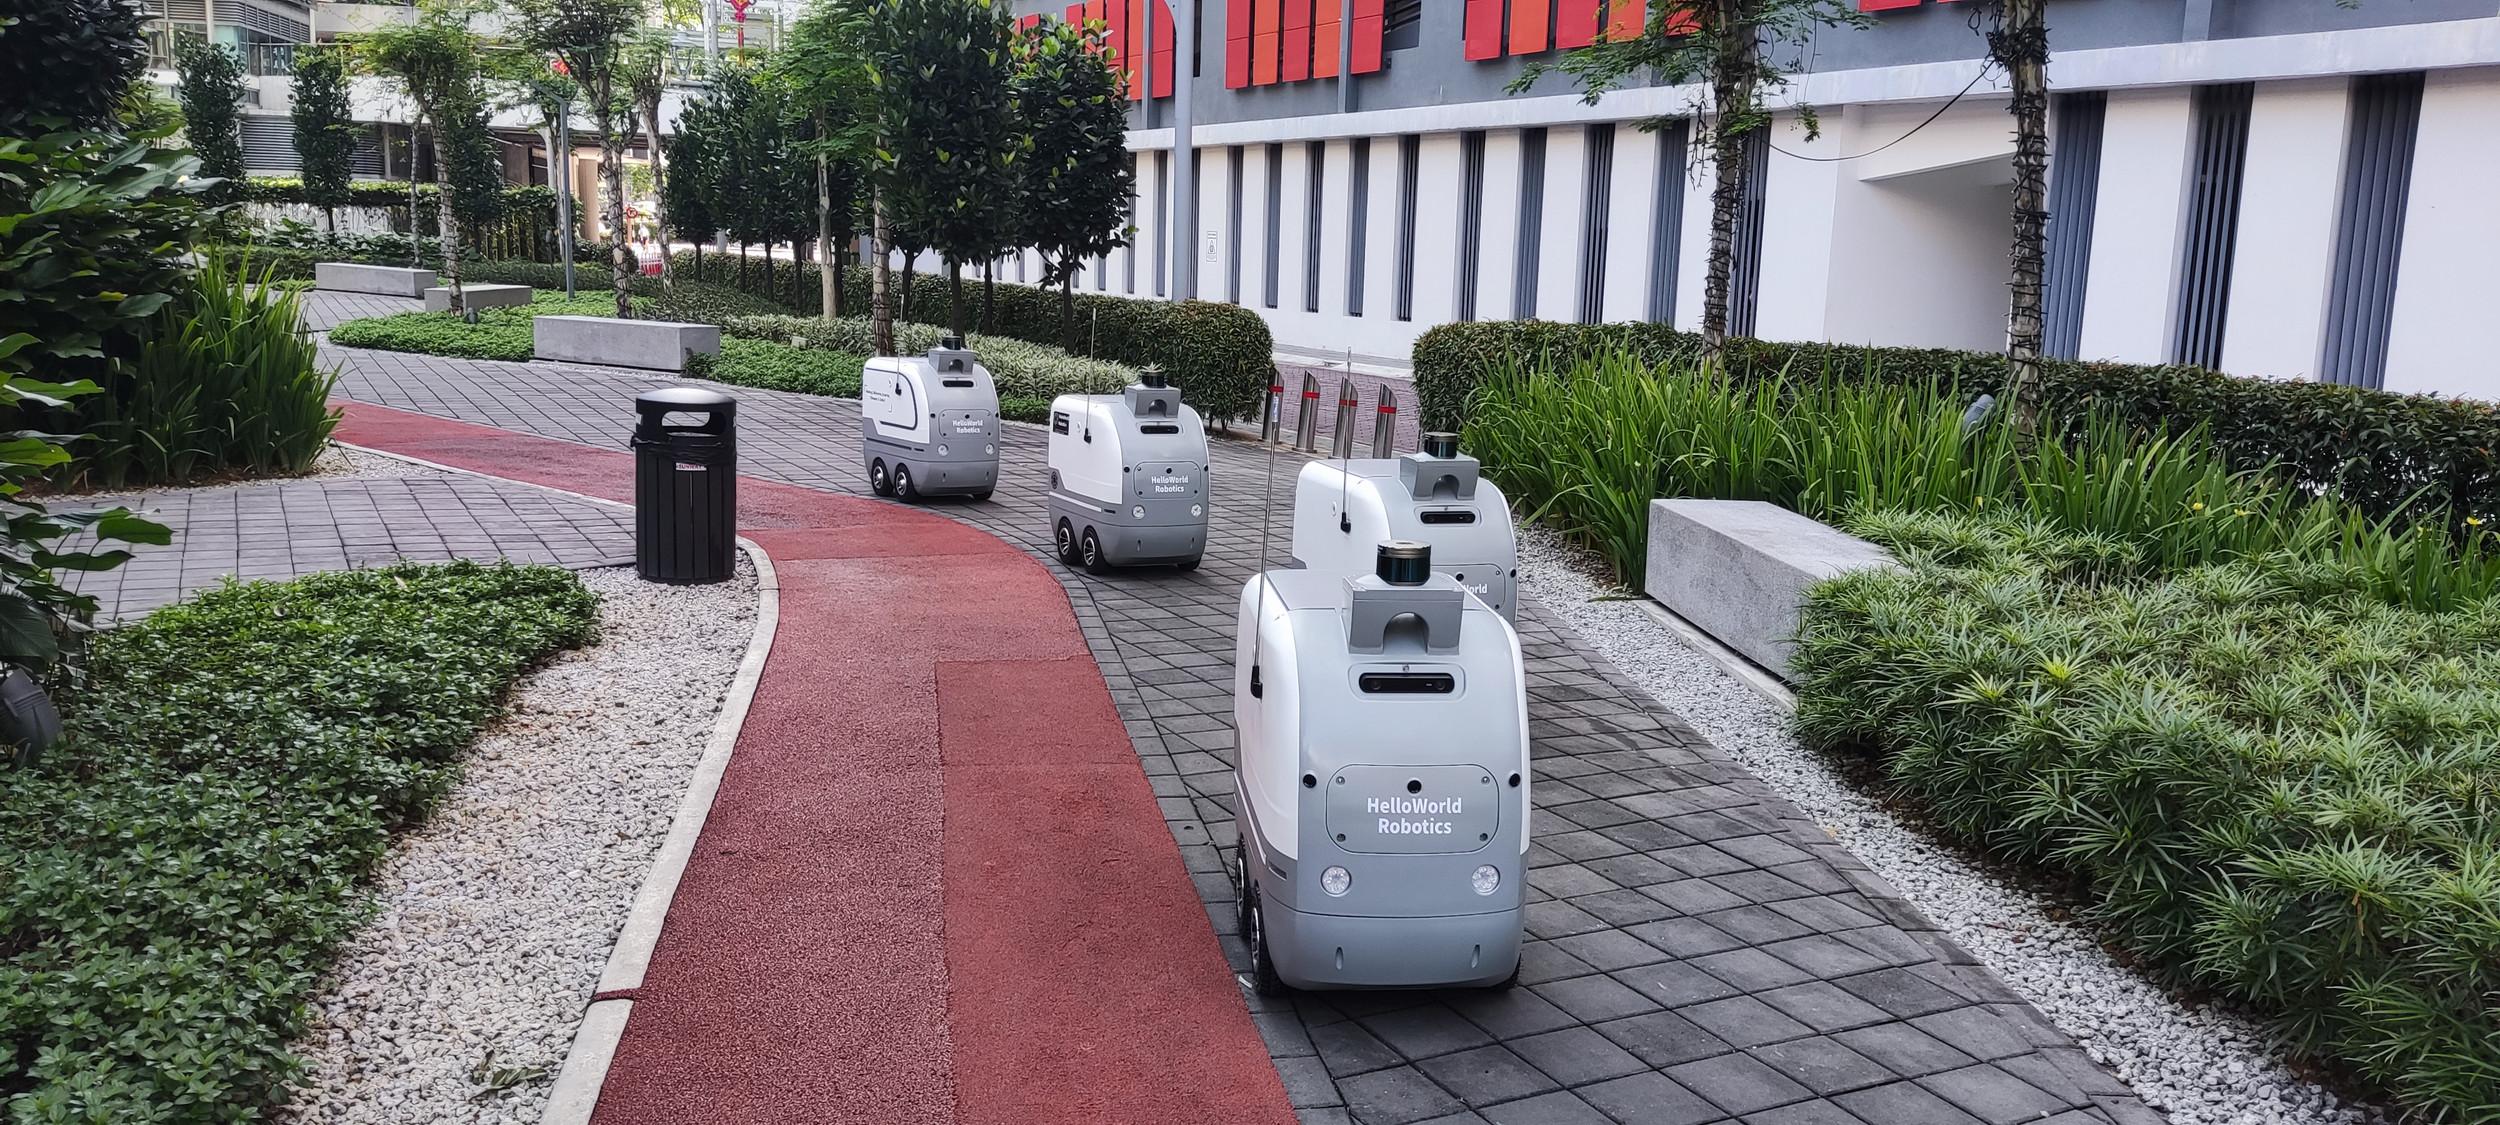 Product PRODUCT | HelloWorld Robotics | Autonomous Delivery Robot | Malaysia | Singapore image